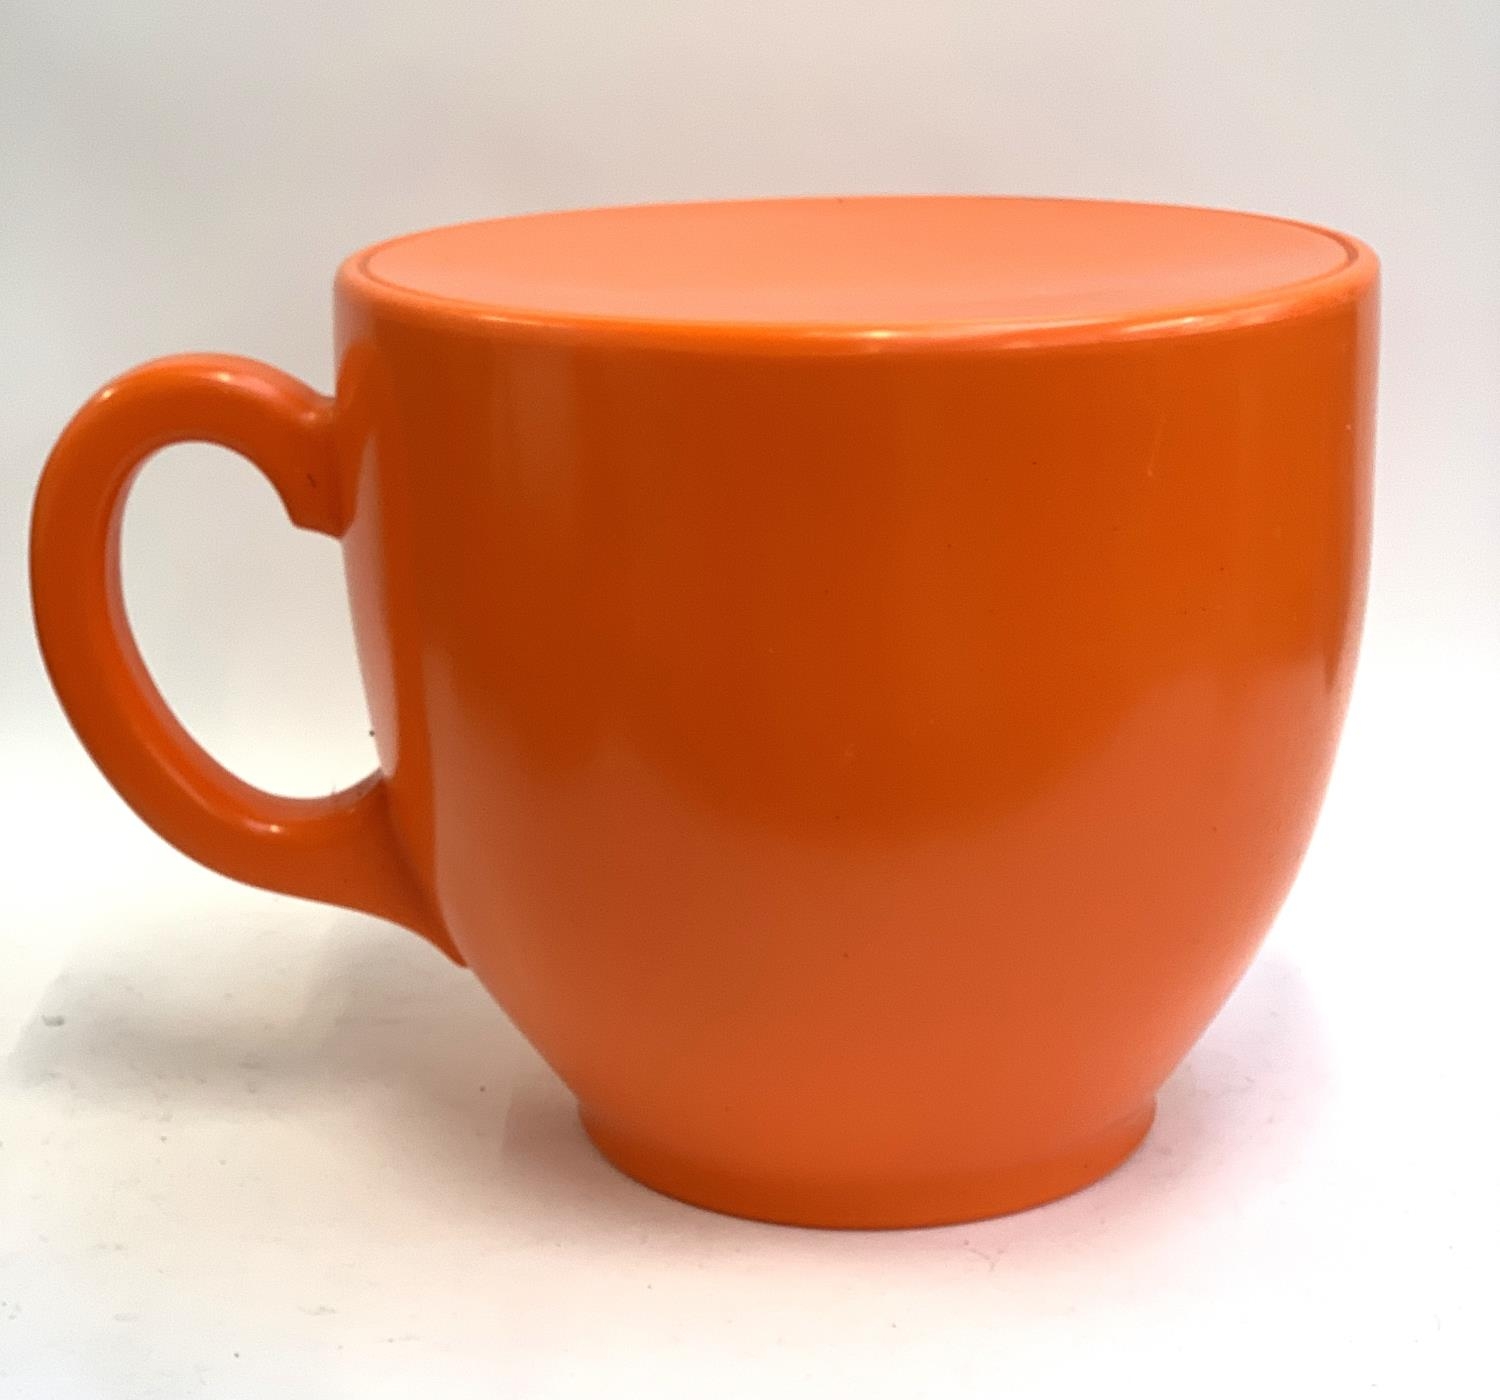 A novelty orange plastic oversized teacup stool, 40cmH